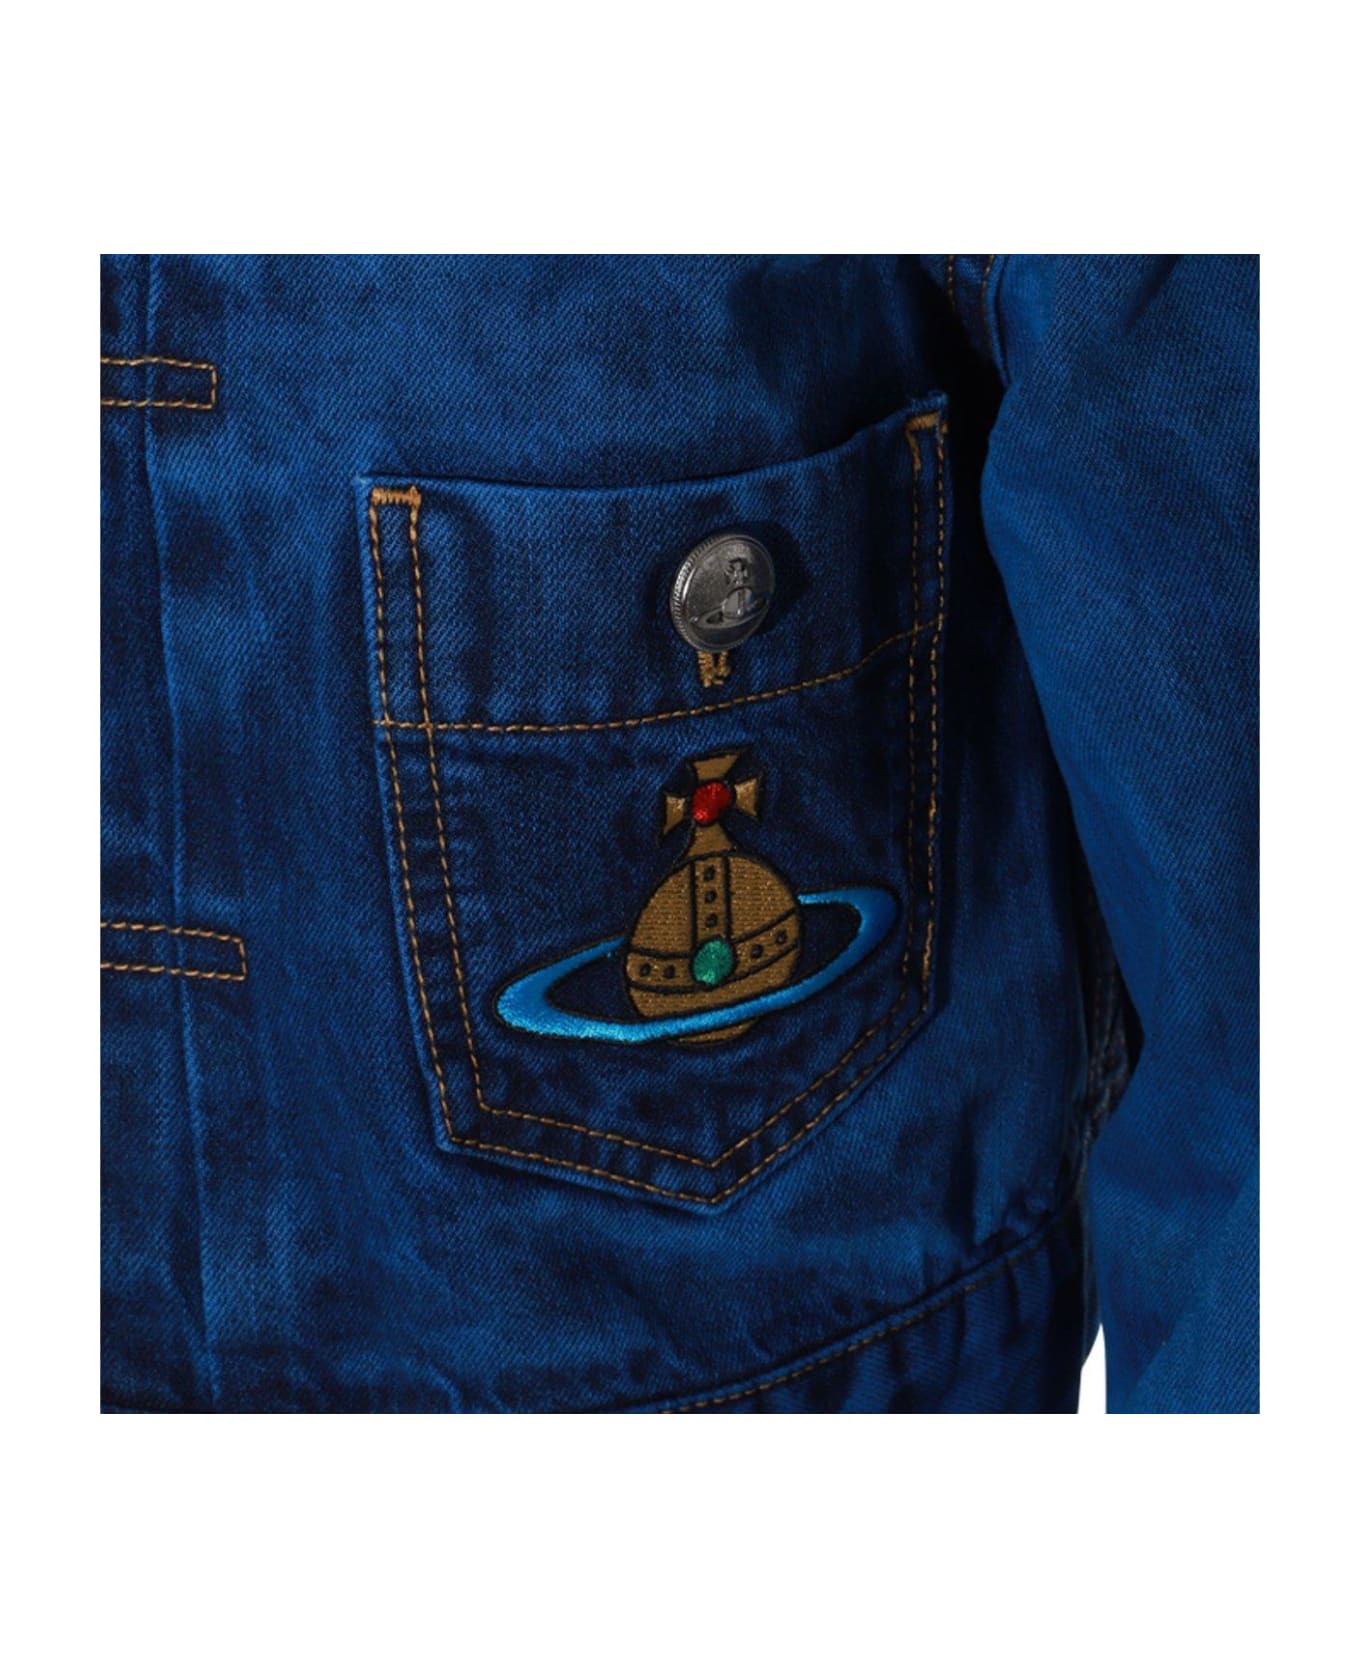 Vivienne Westwood Cropped Denim Jacket - Blu ジャケット